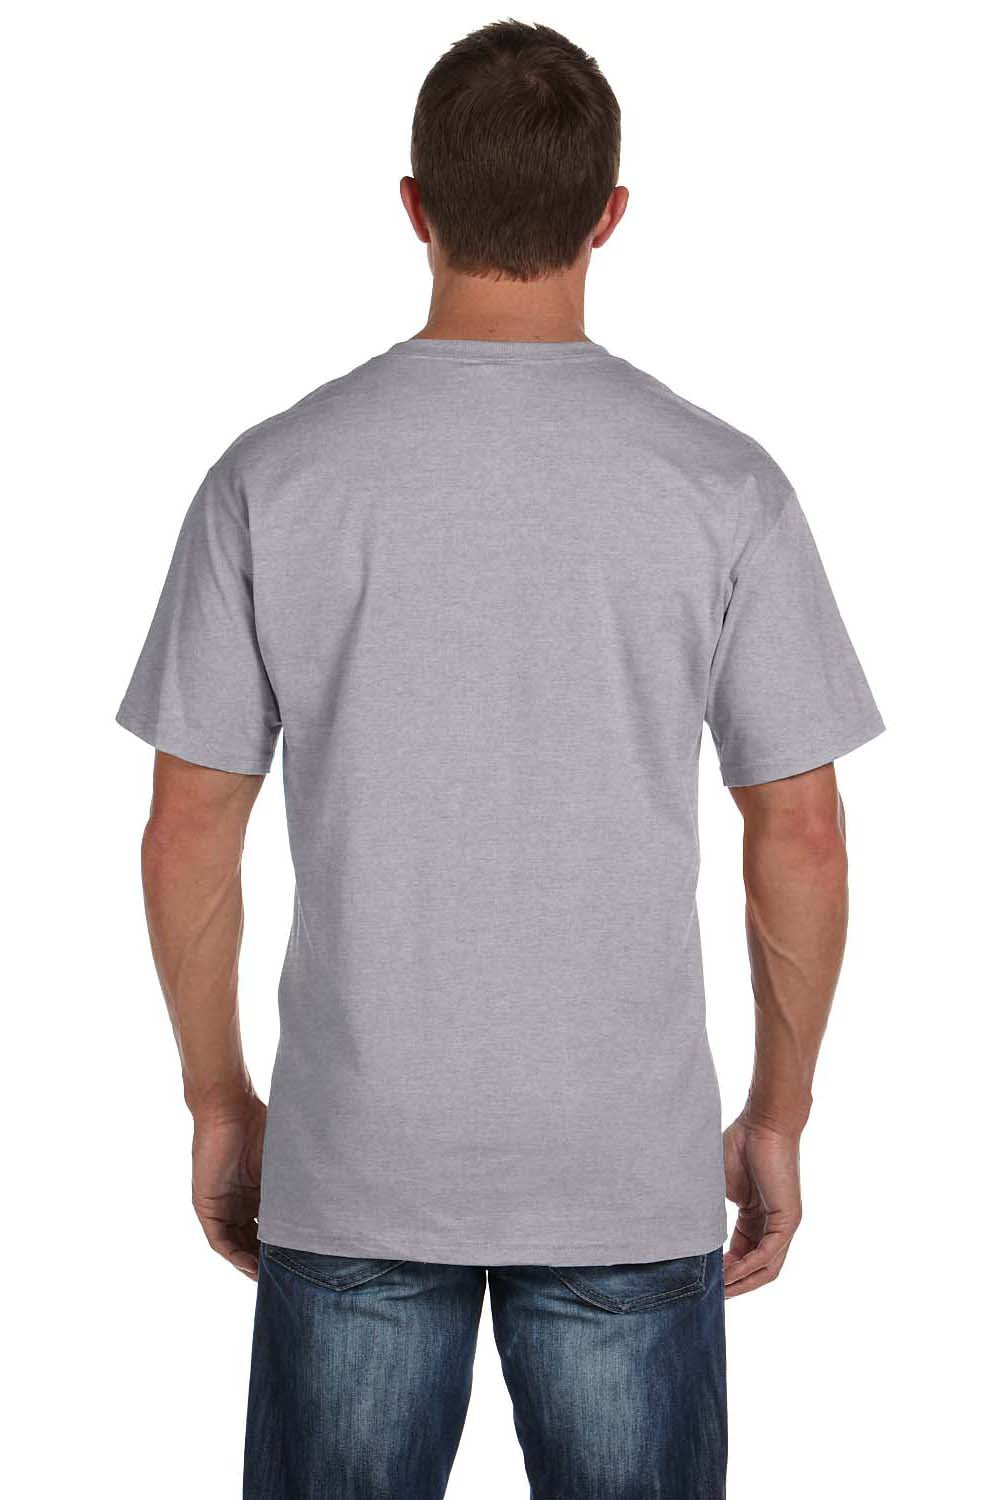 Fruit Of The Loom 3931P Mens HD Jersey Short Sleeve Crewneck T-Shirt w/ Pocket Heather Grey Back